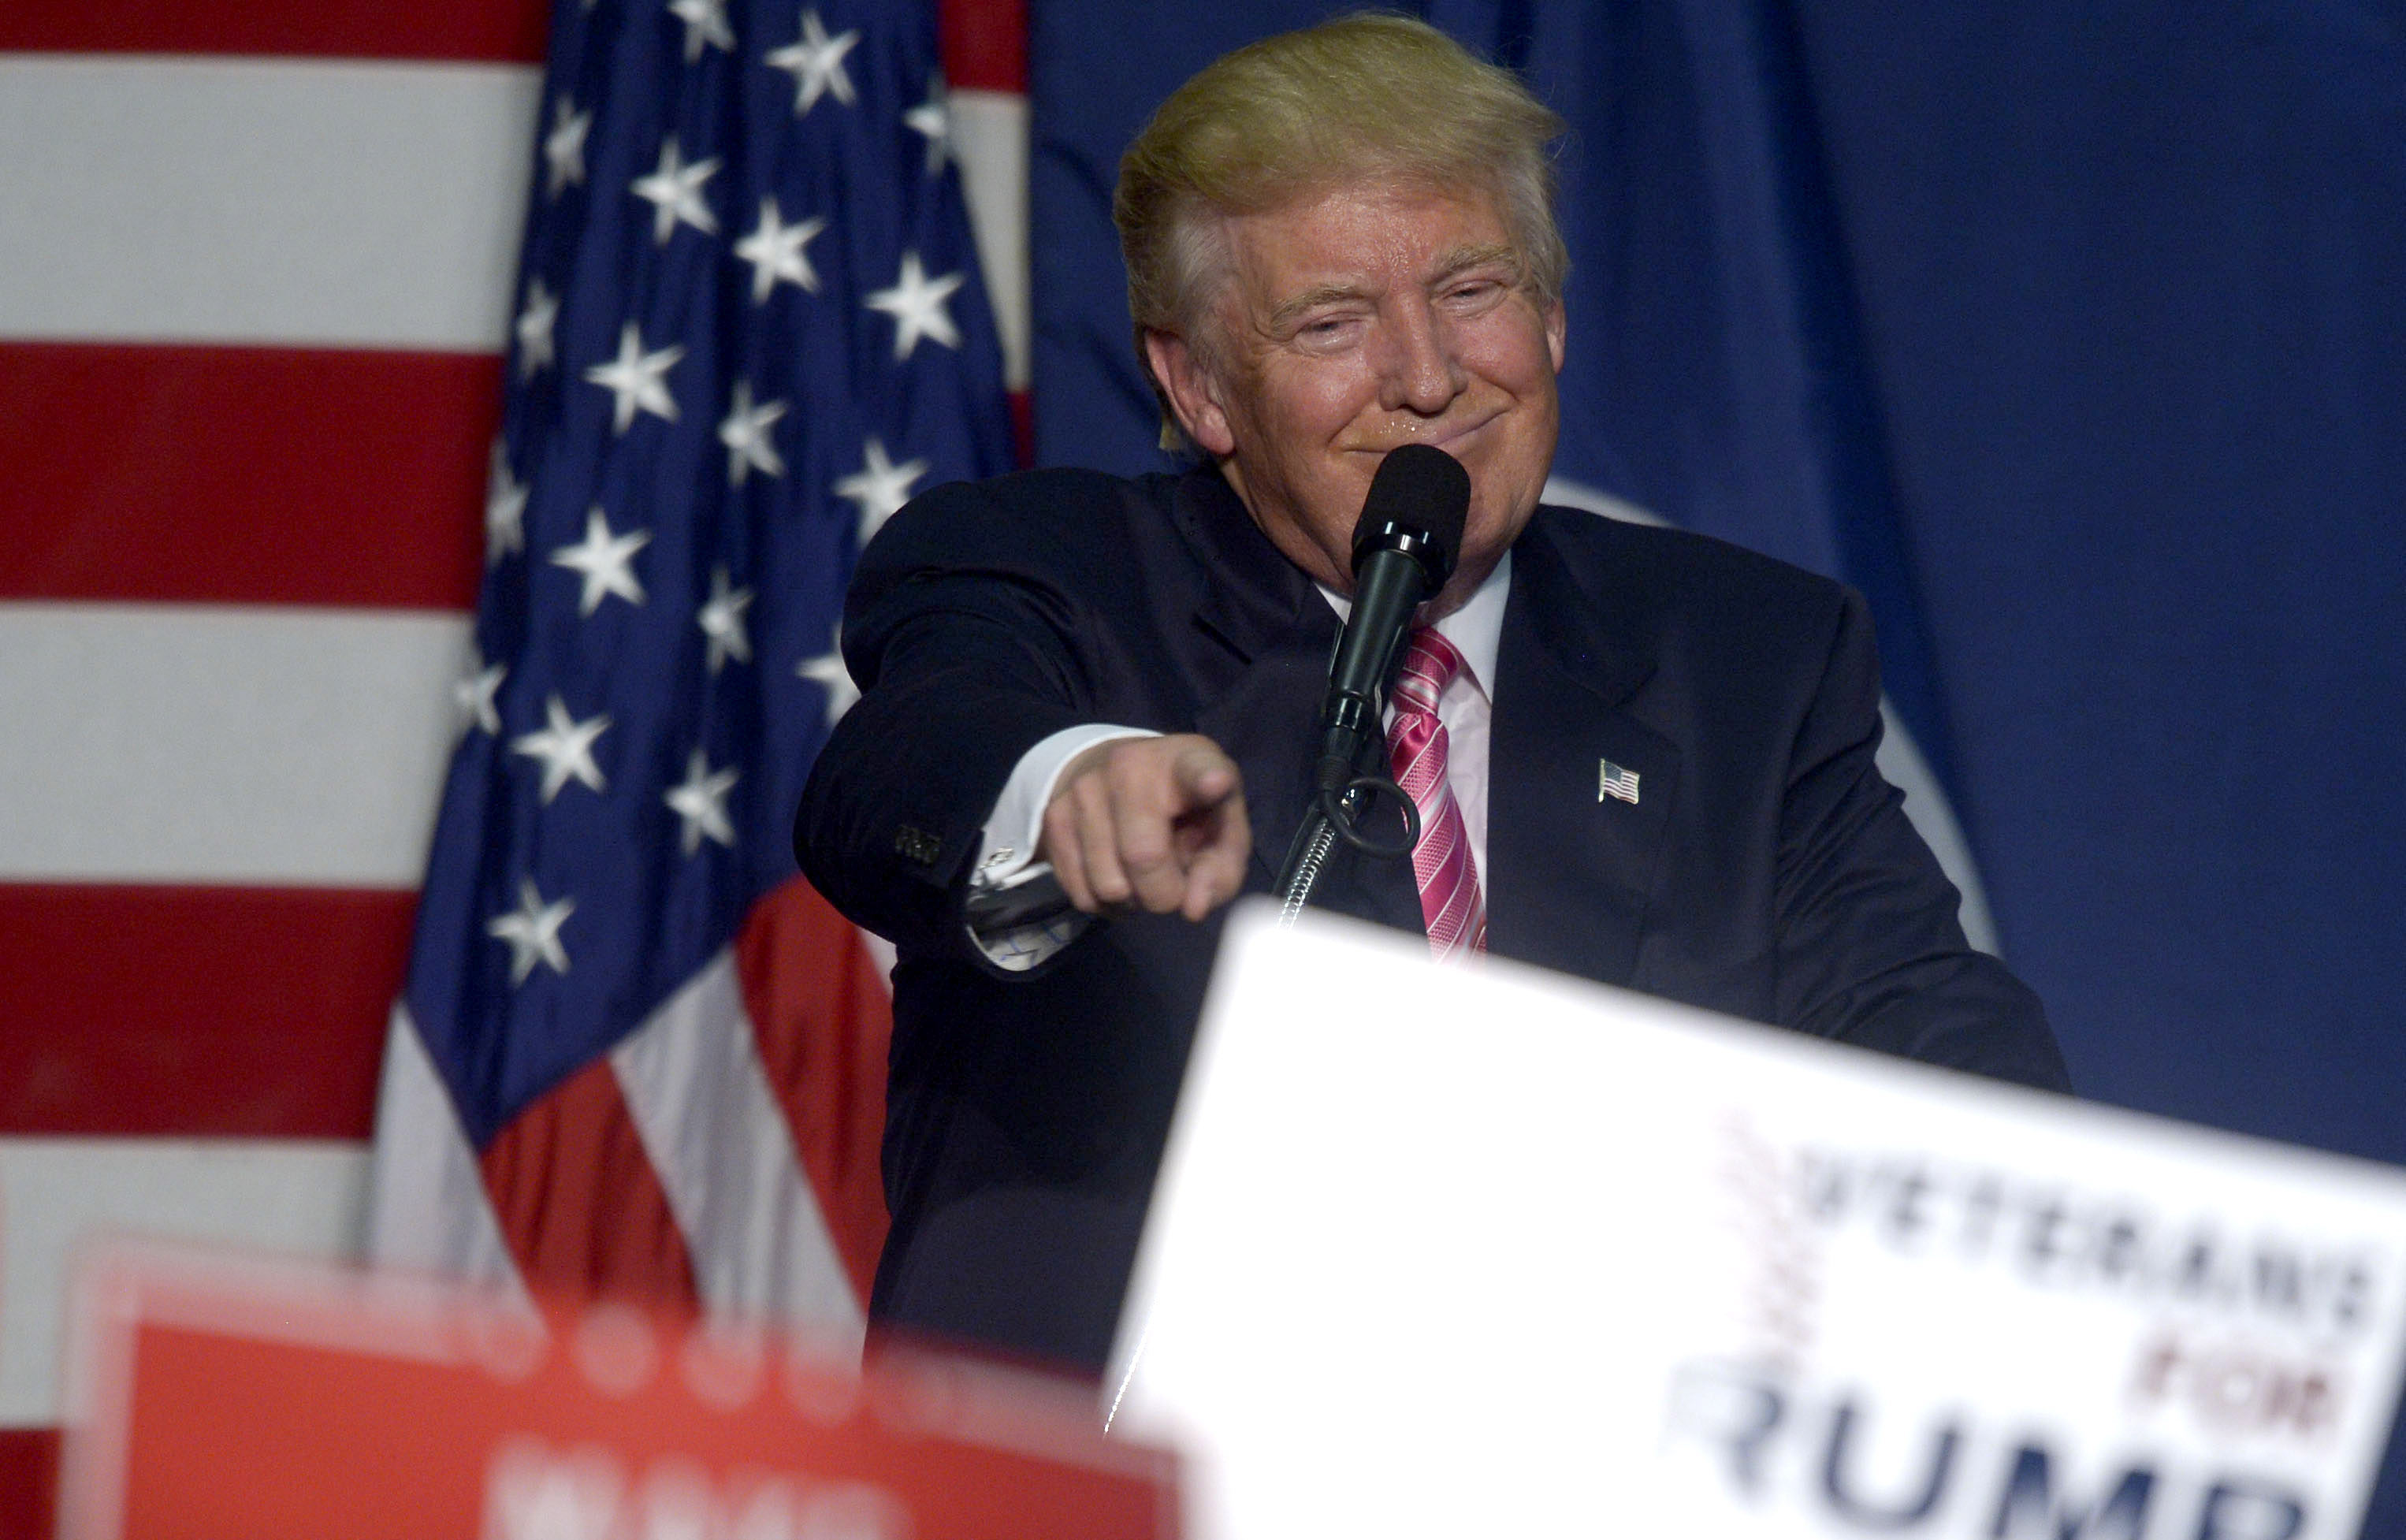 GOP nominee Donald Trump holds a rally in Fredricksburg, VA on Aug. 20, 2016. (Leigh Vogel—WireImage)